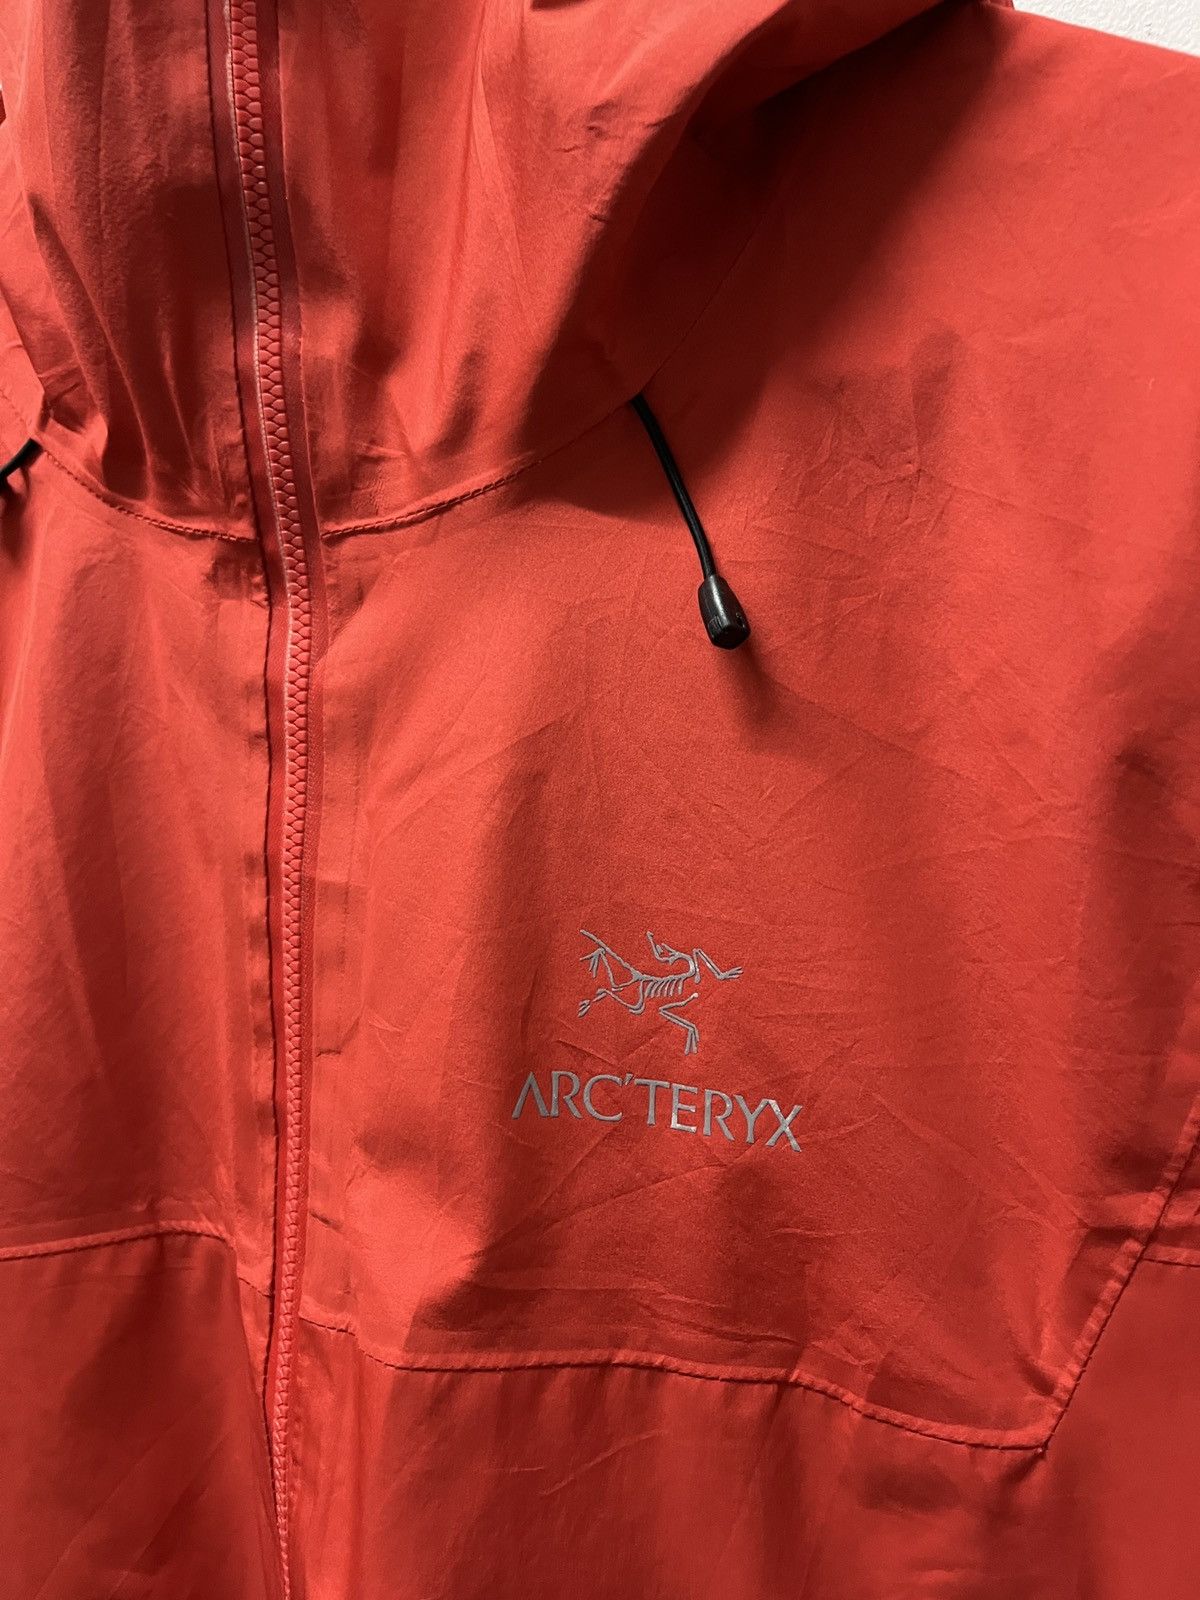 ❗️FINAL DROP❗️ Arc'teryx Goretex Jacket - 2